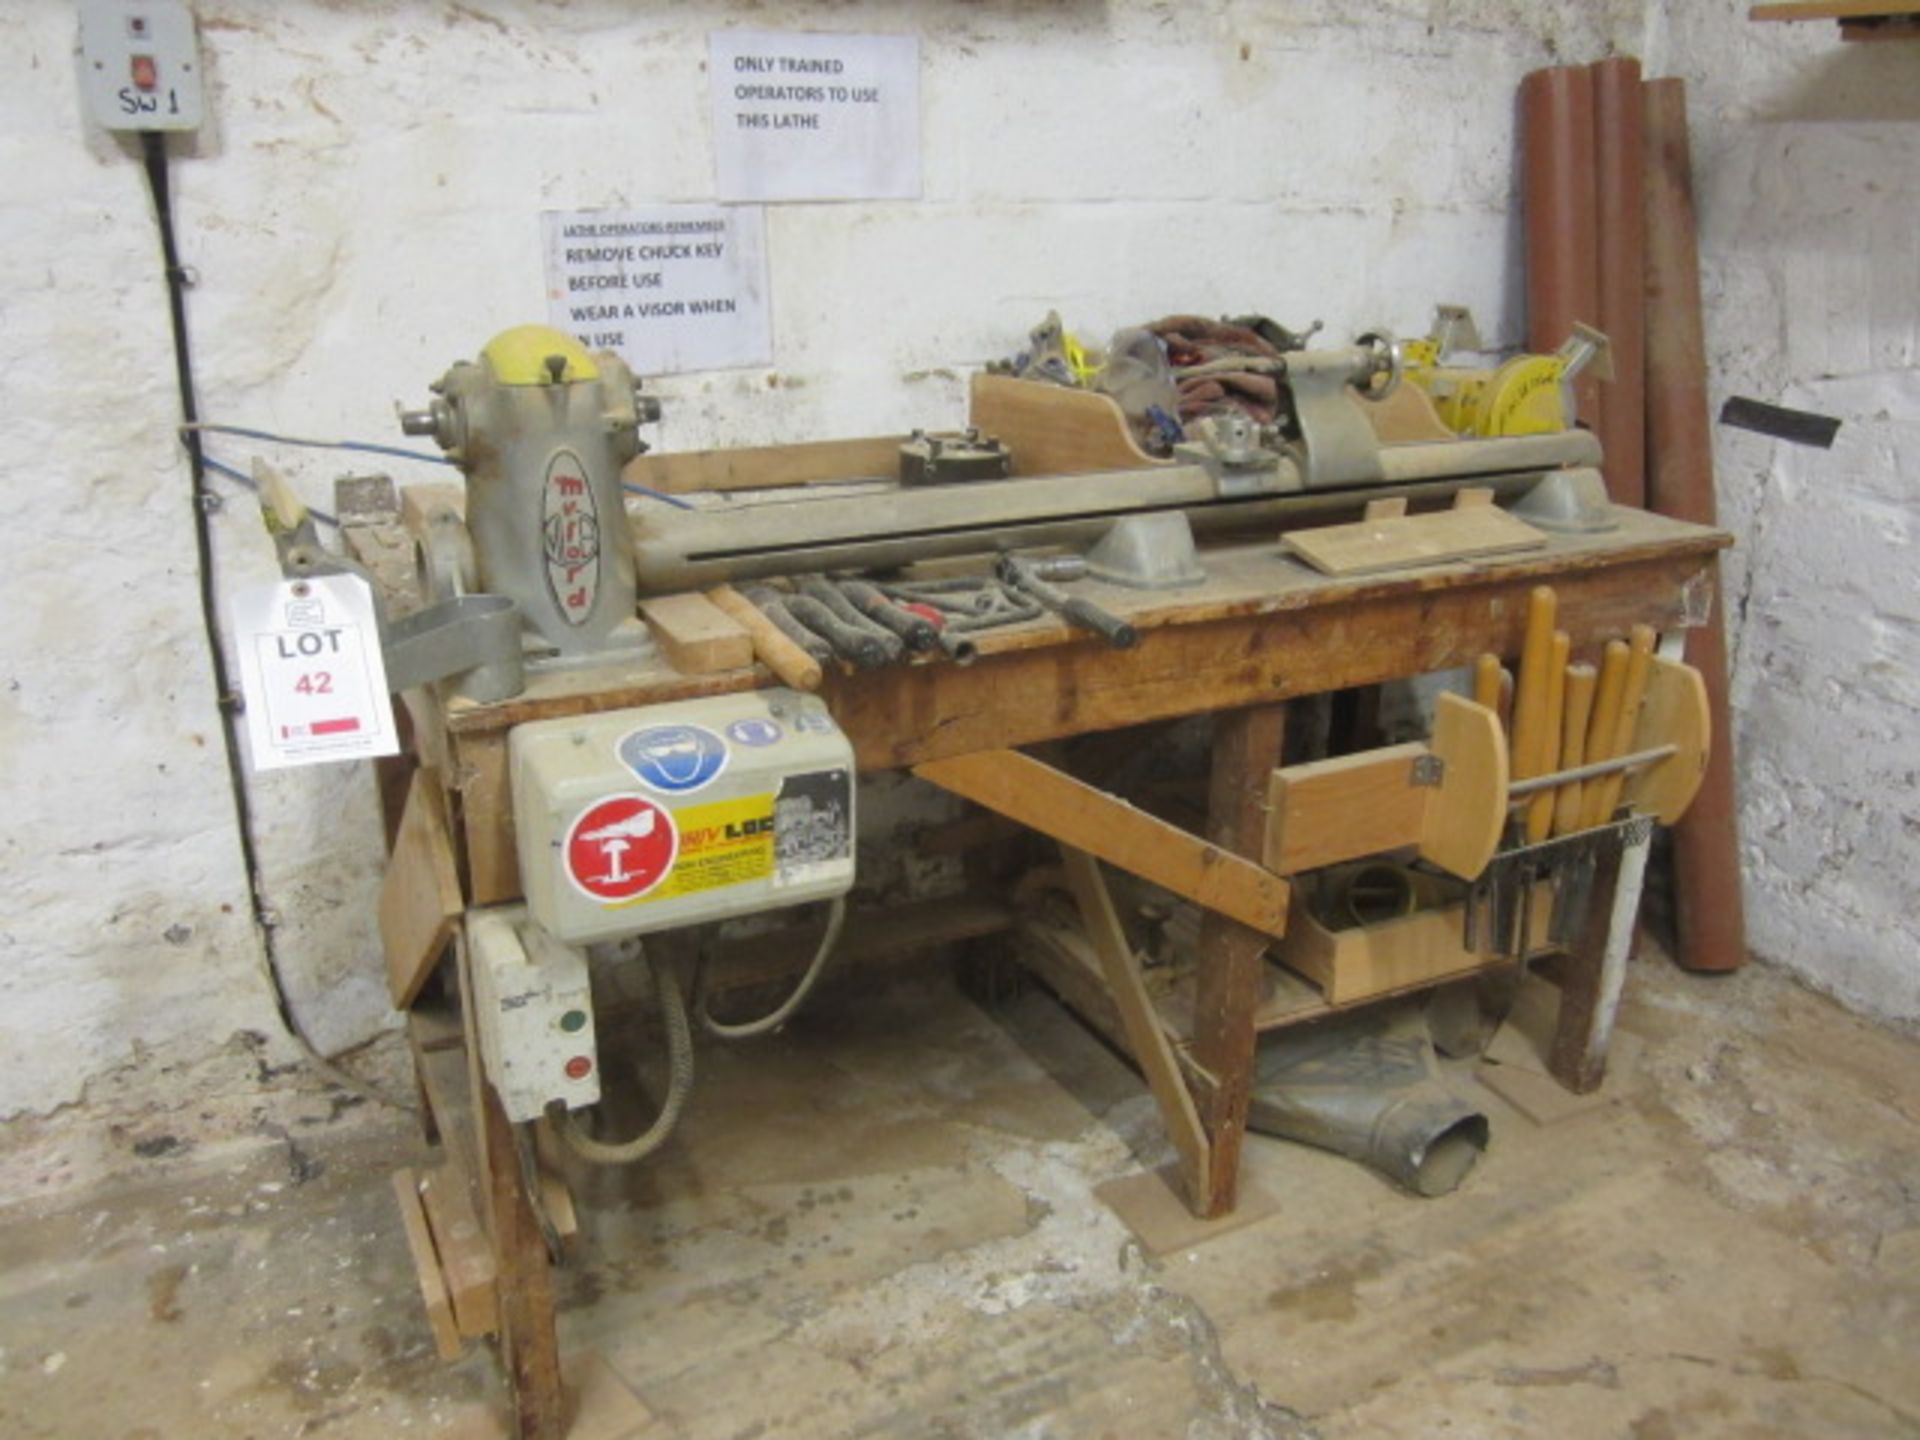 Myfold bench top wood turning lathe, Driv Loc electronic DC injection brake, various hand tools,